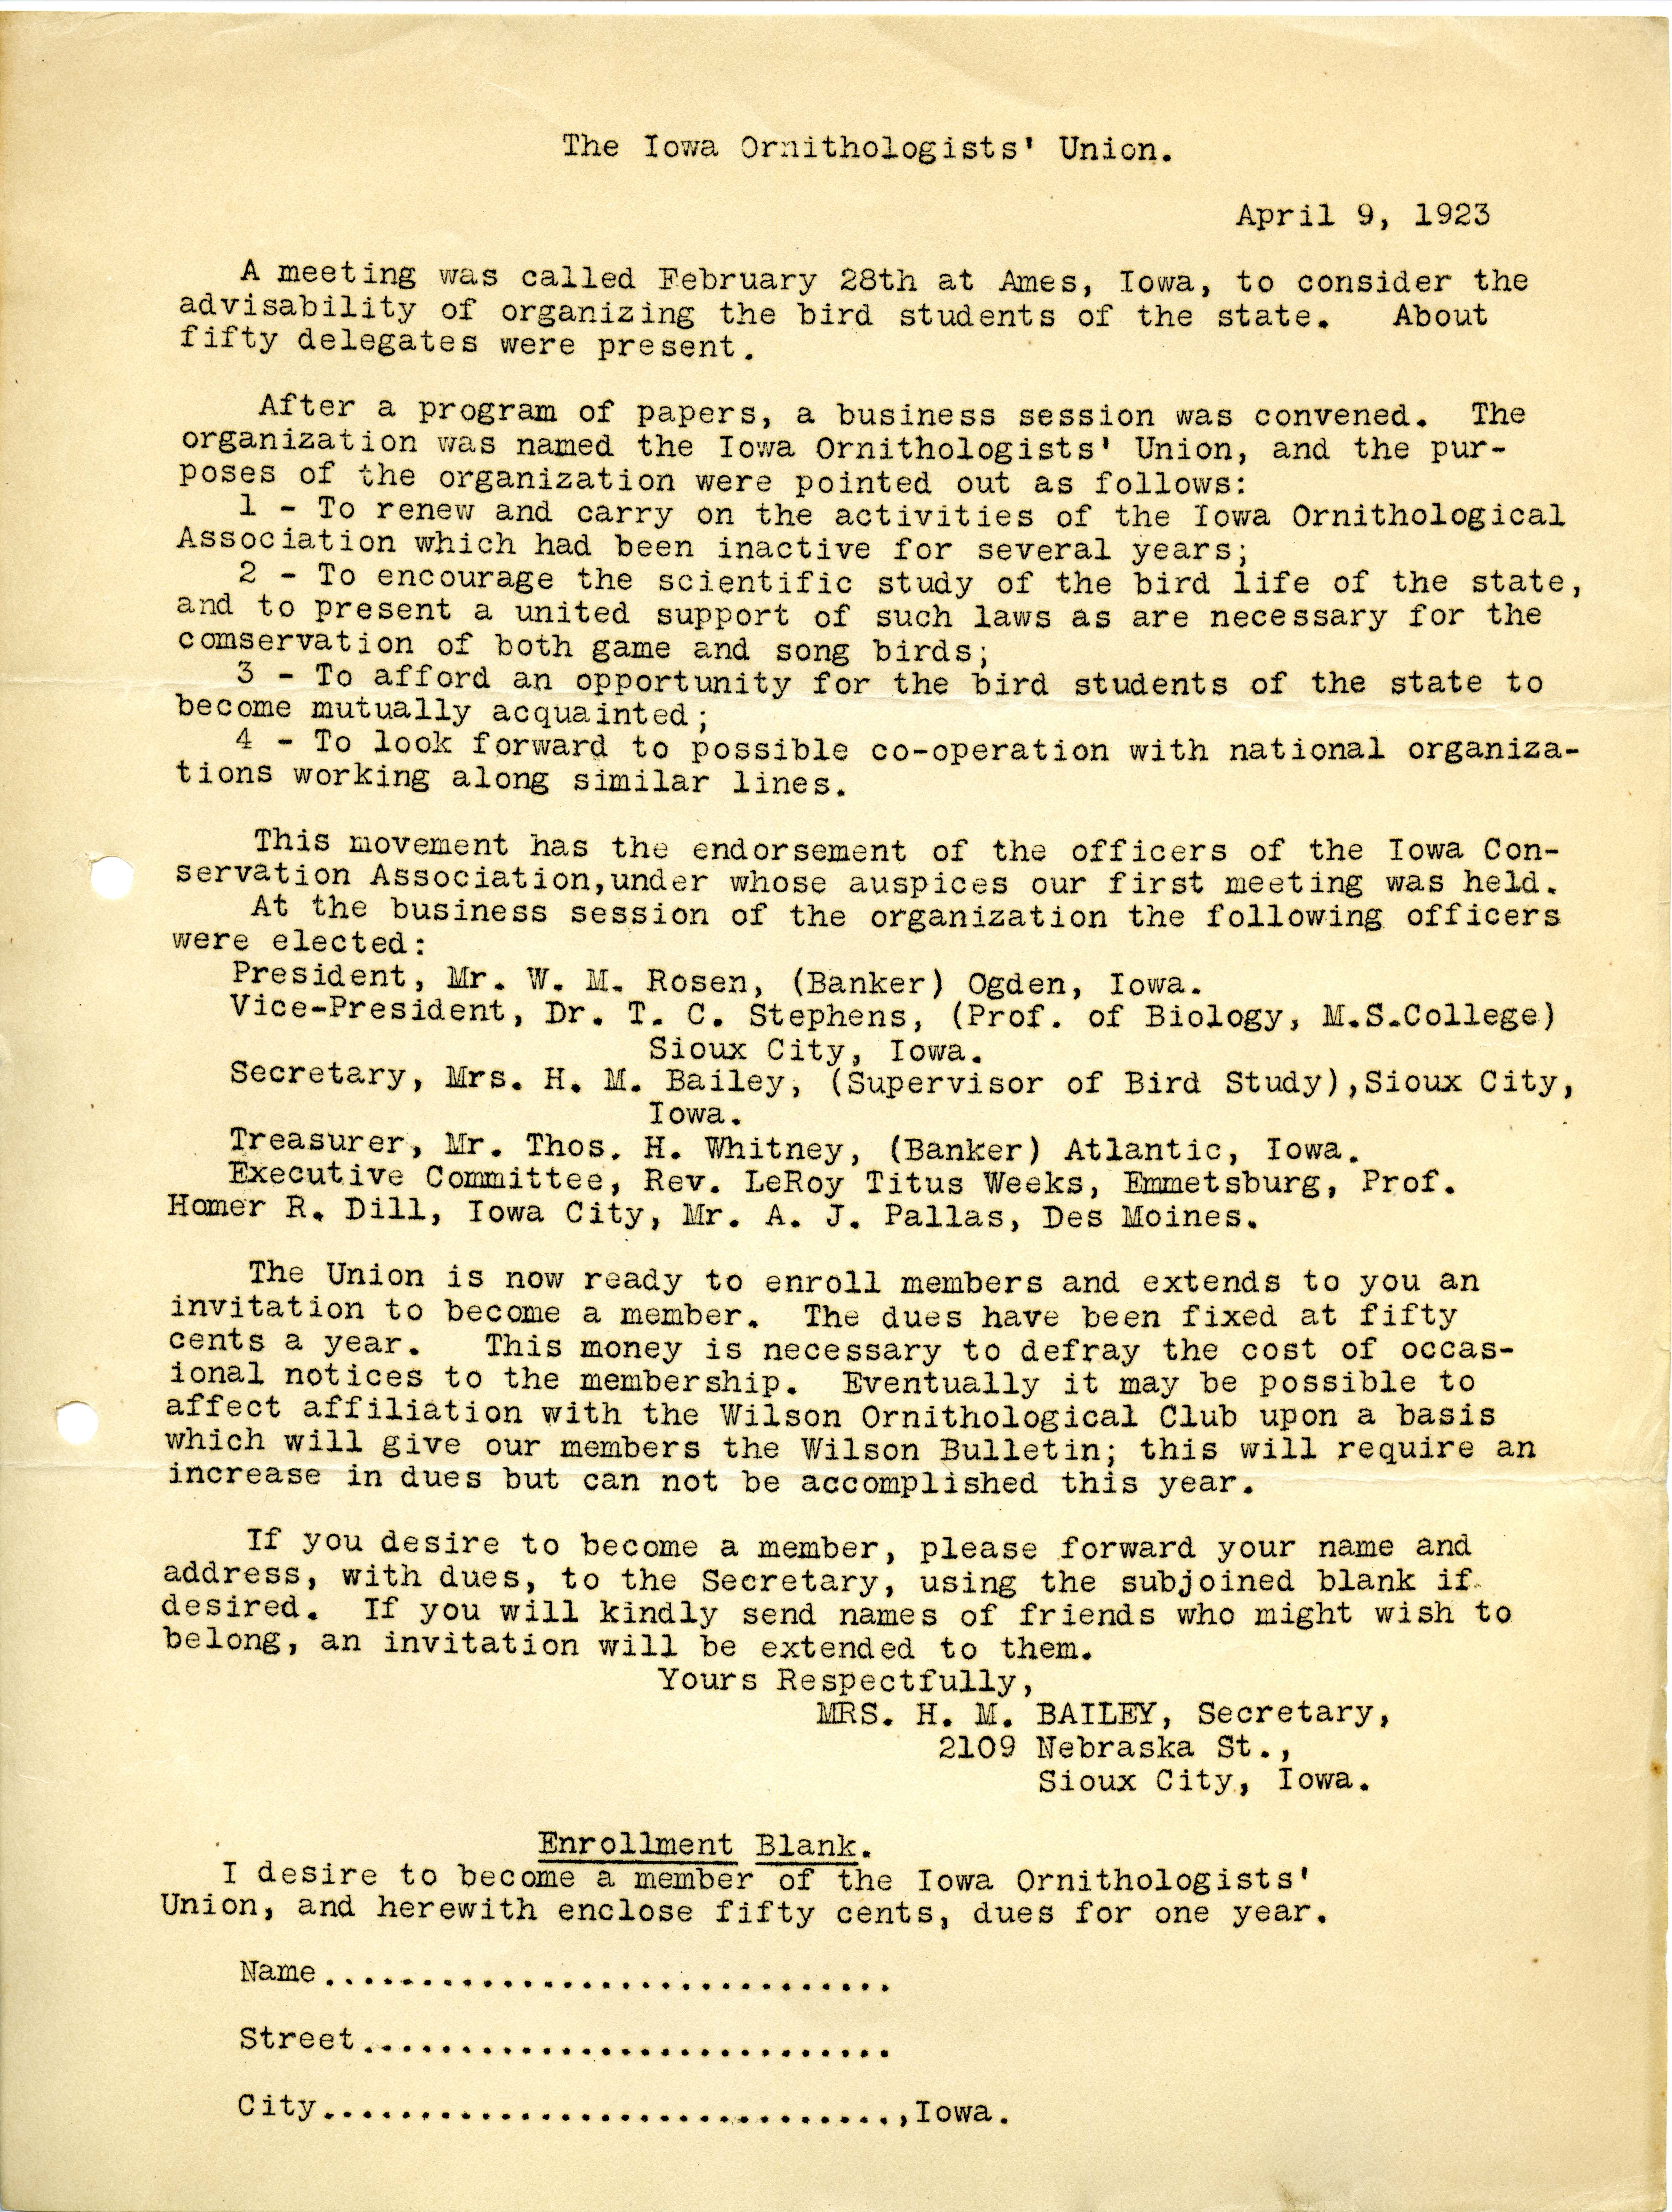 The Iowa Ornithologists' Union meeting notes, April 9, 1923